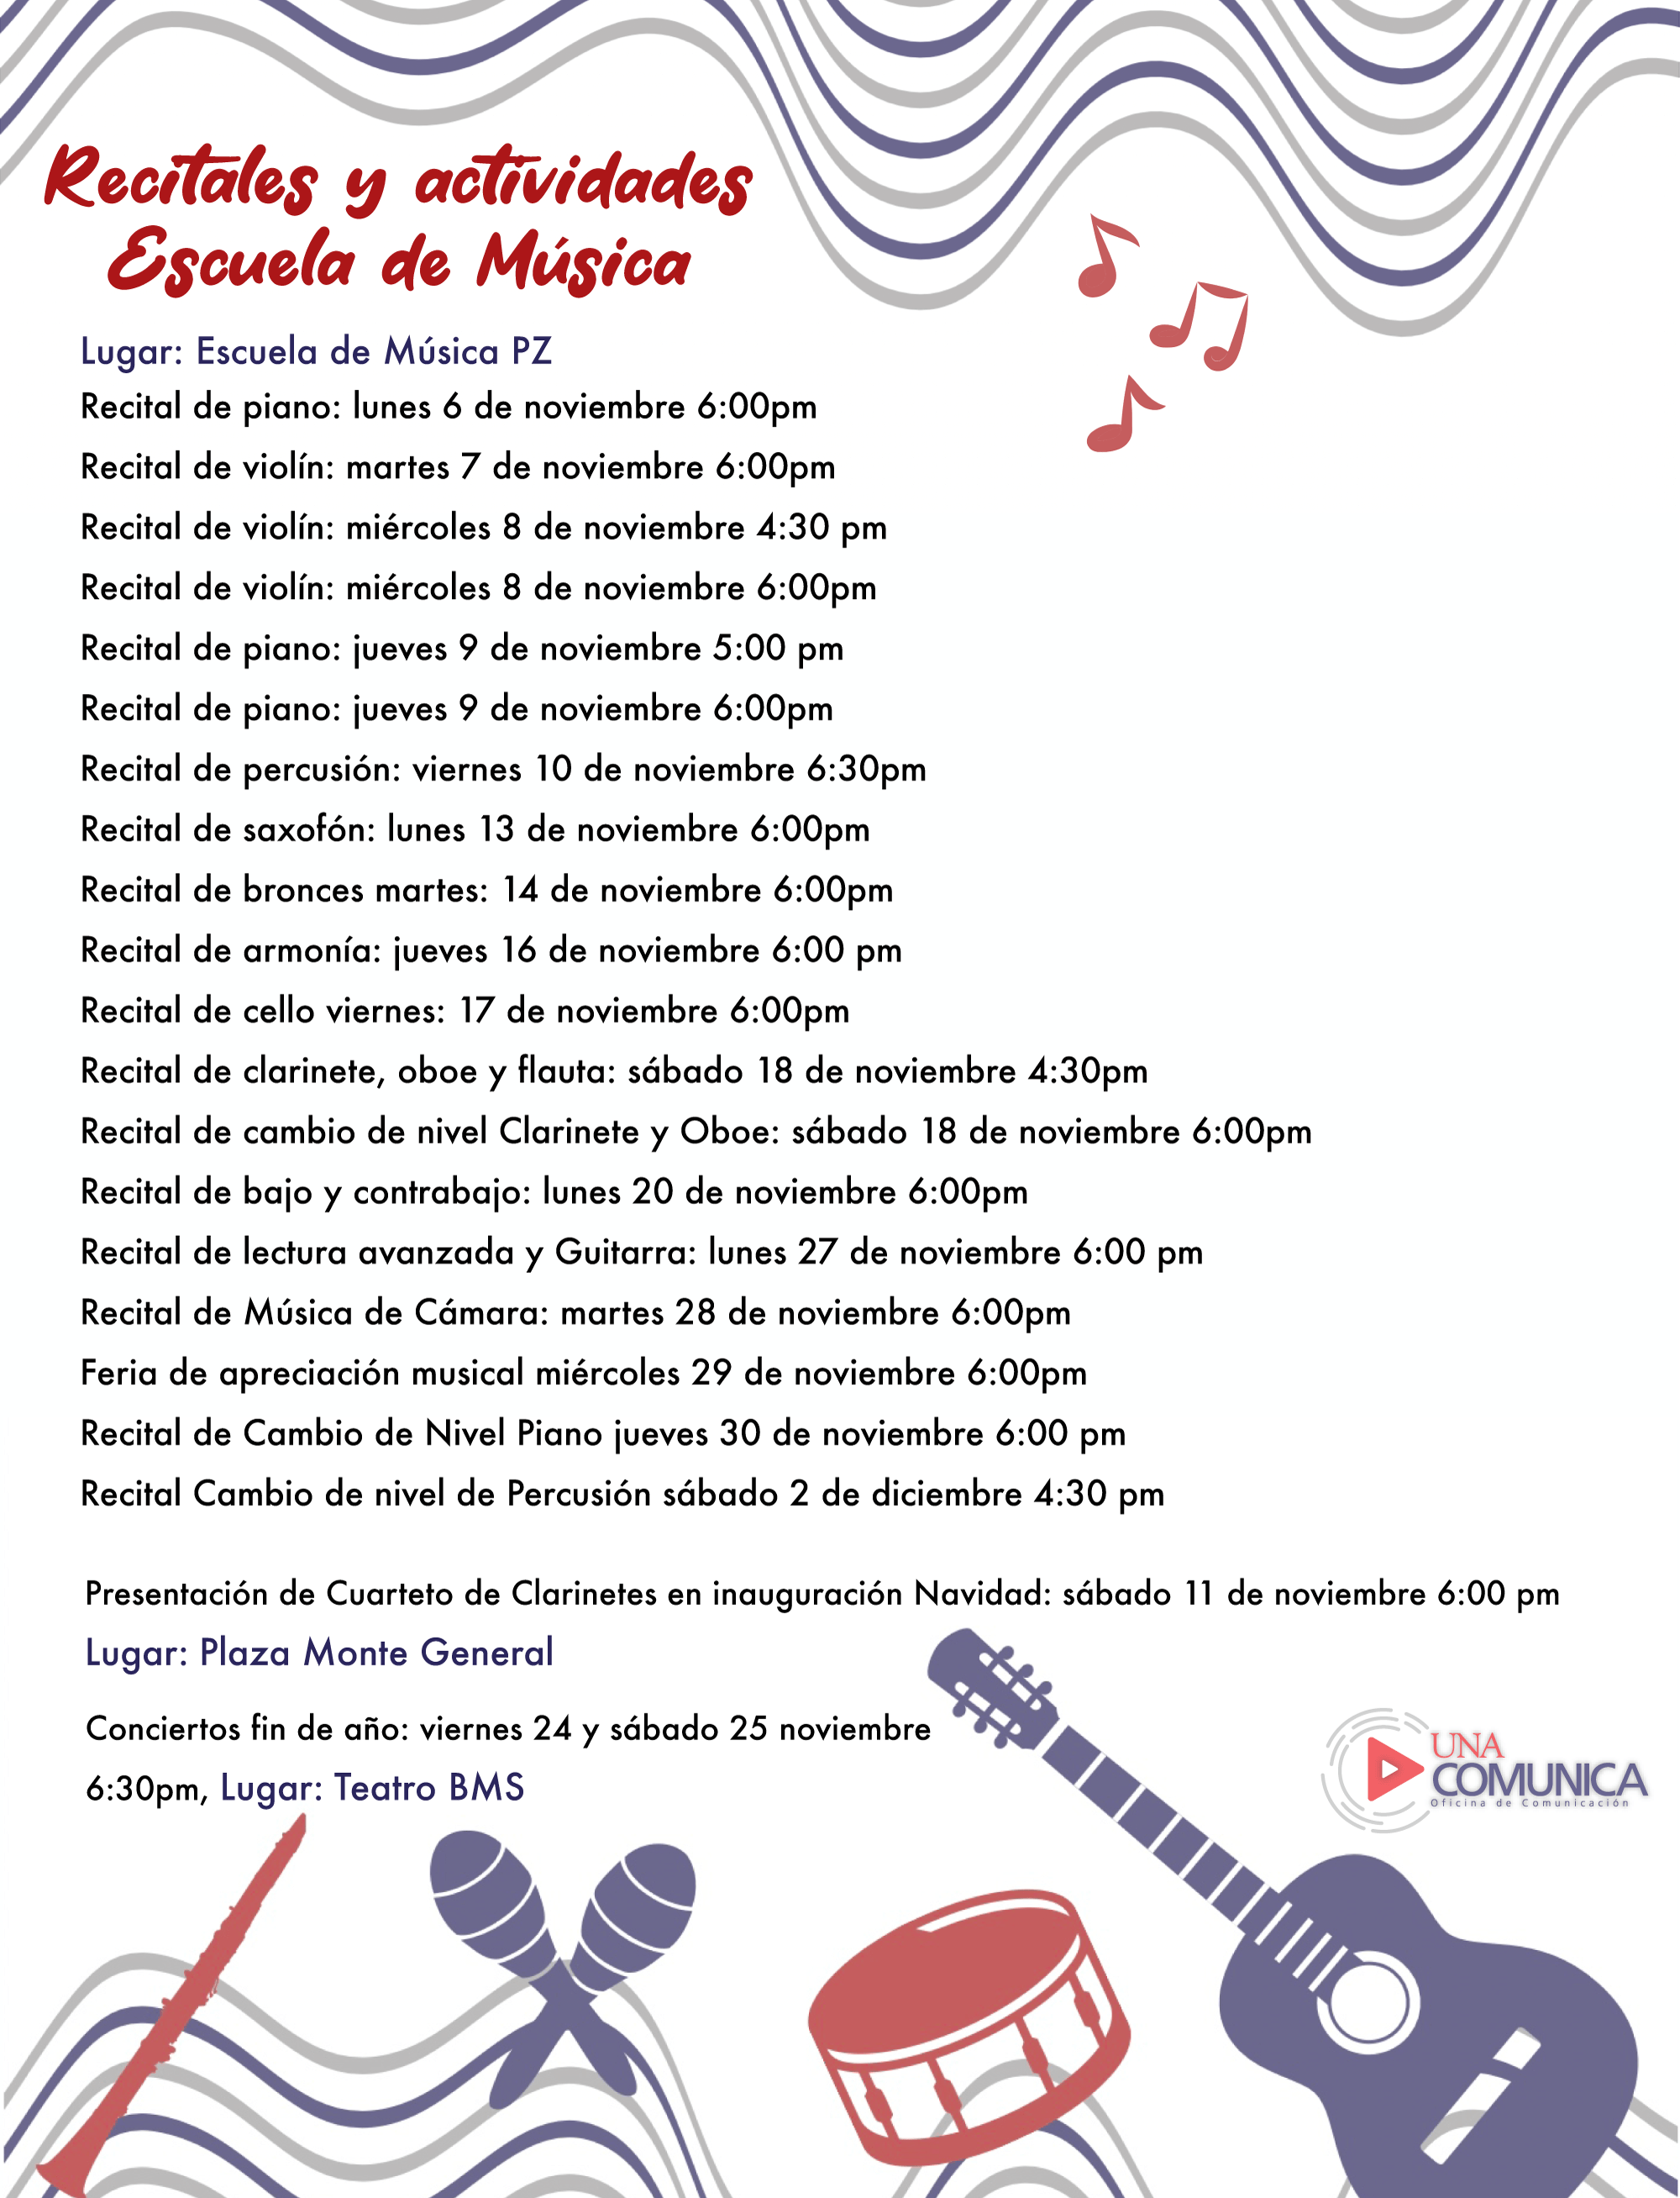 Agenda de eventos Escuela de Música Sinfónica de Pérez Zeledón